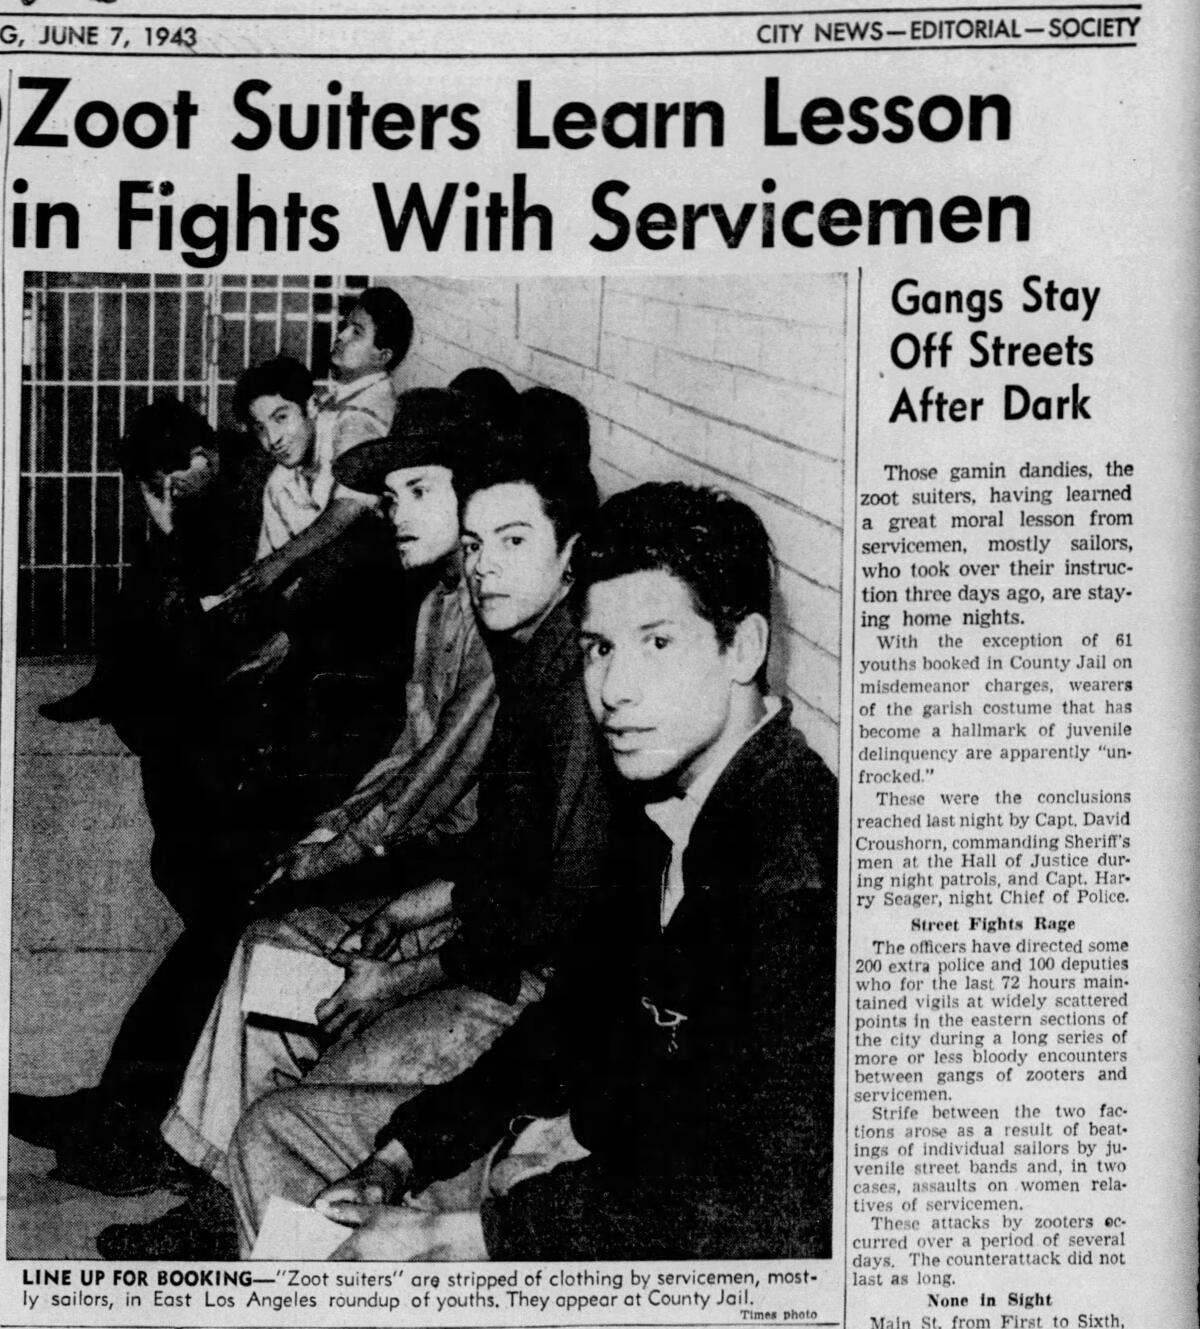 Los Angeles Times, June 7, 1943